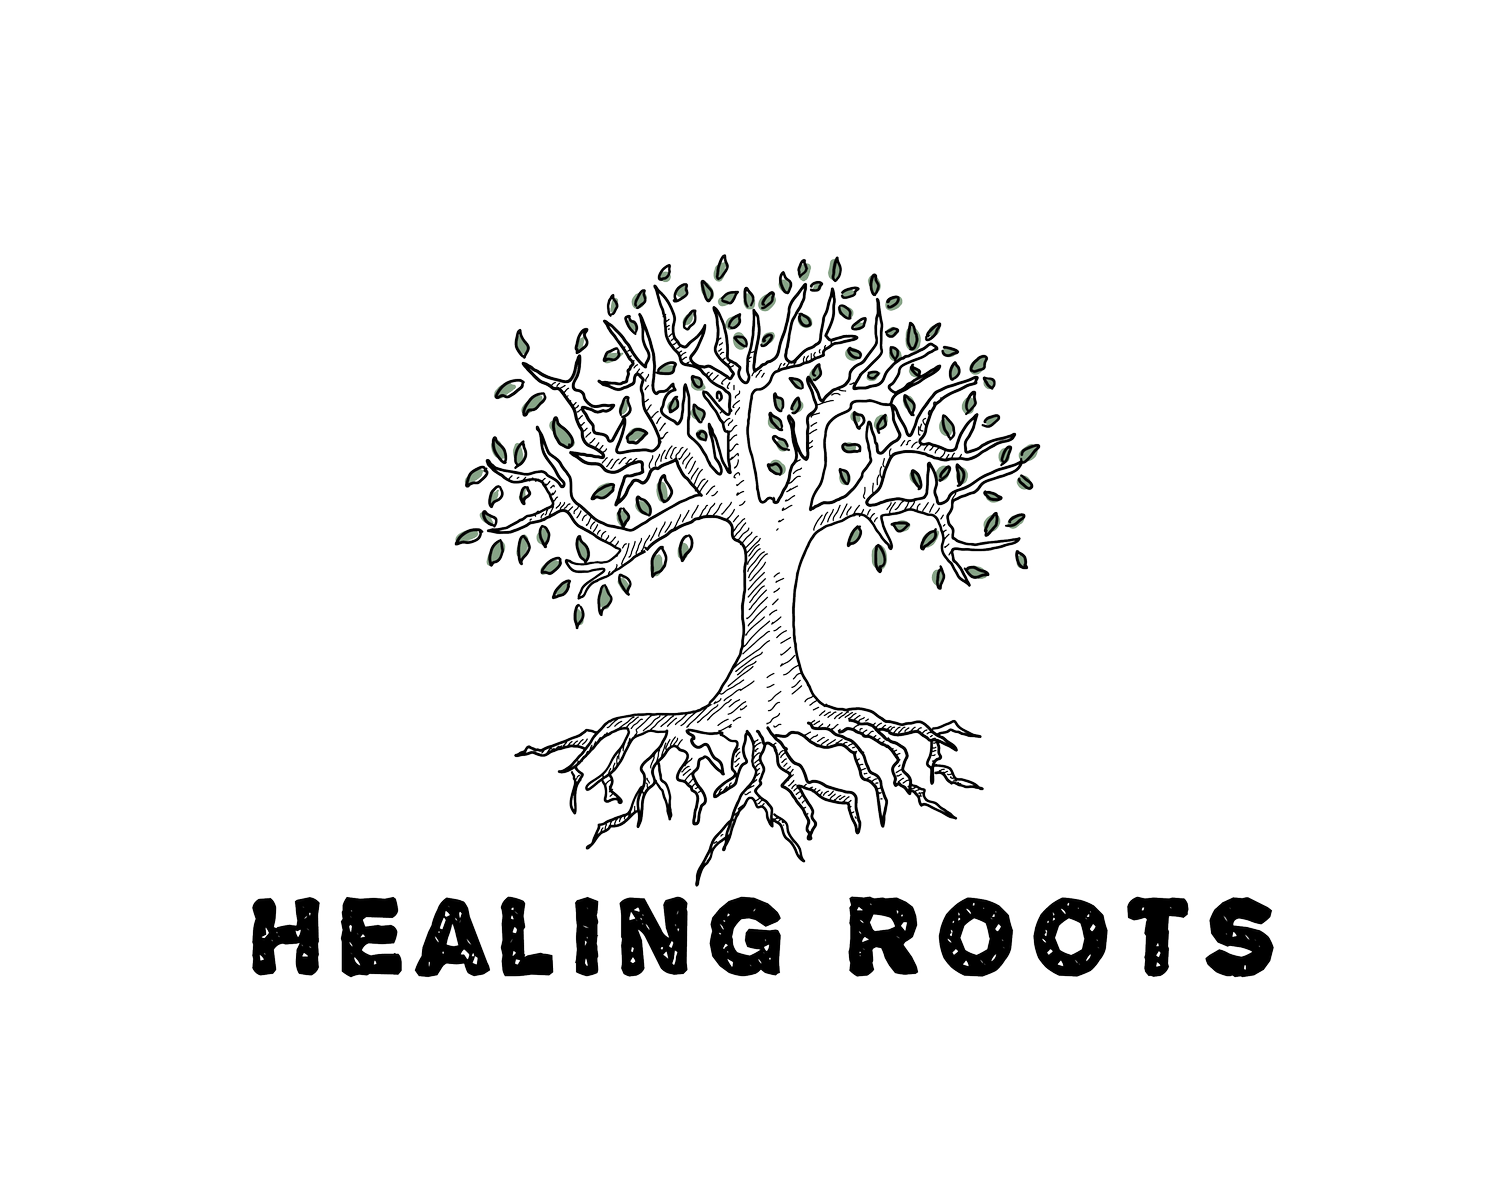 Healing Roots